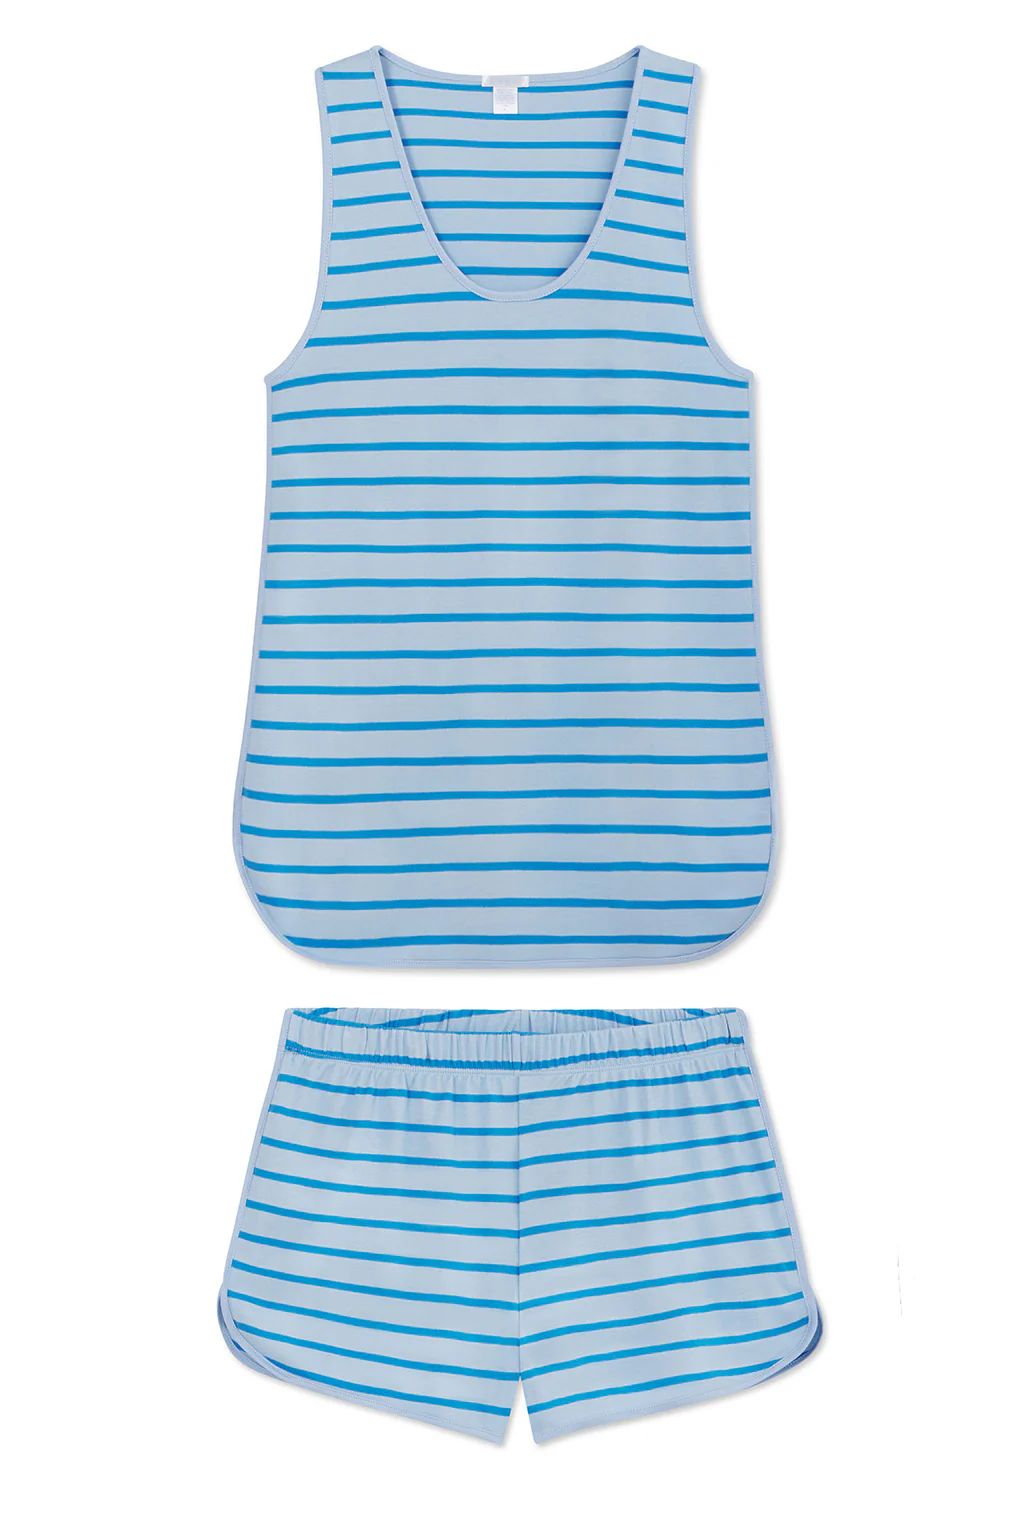 Pima Tank-Short Set in French Blue Anchor Stripe | Lake Pajamas